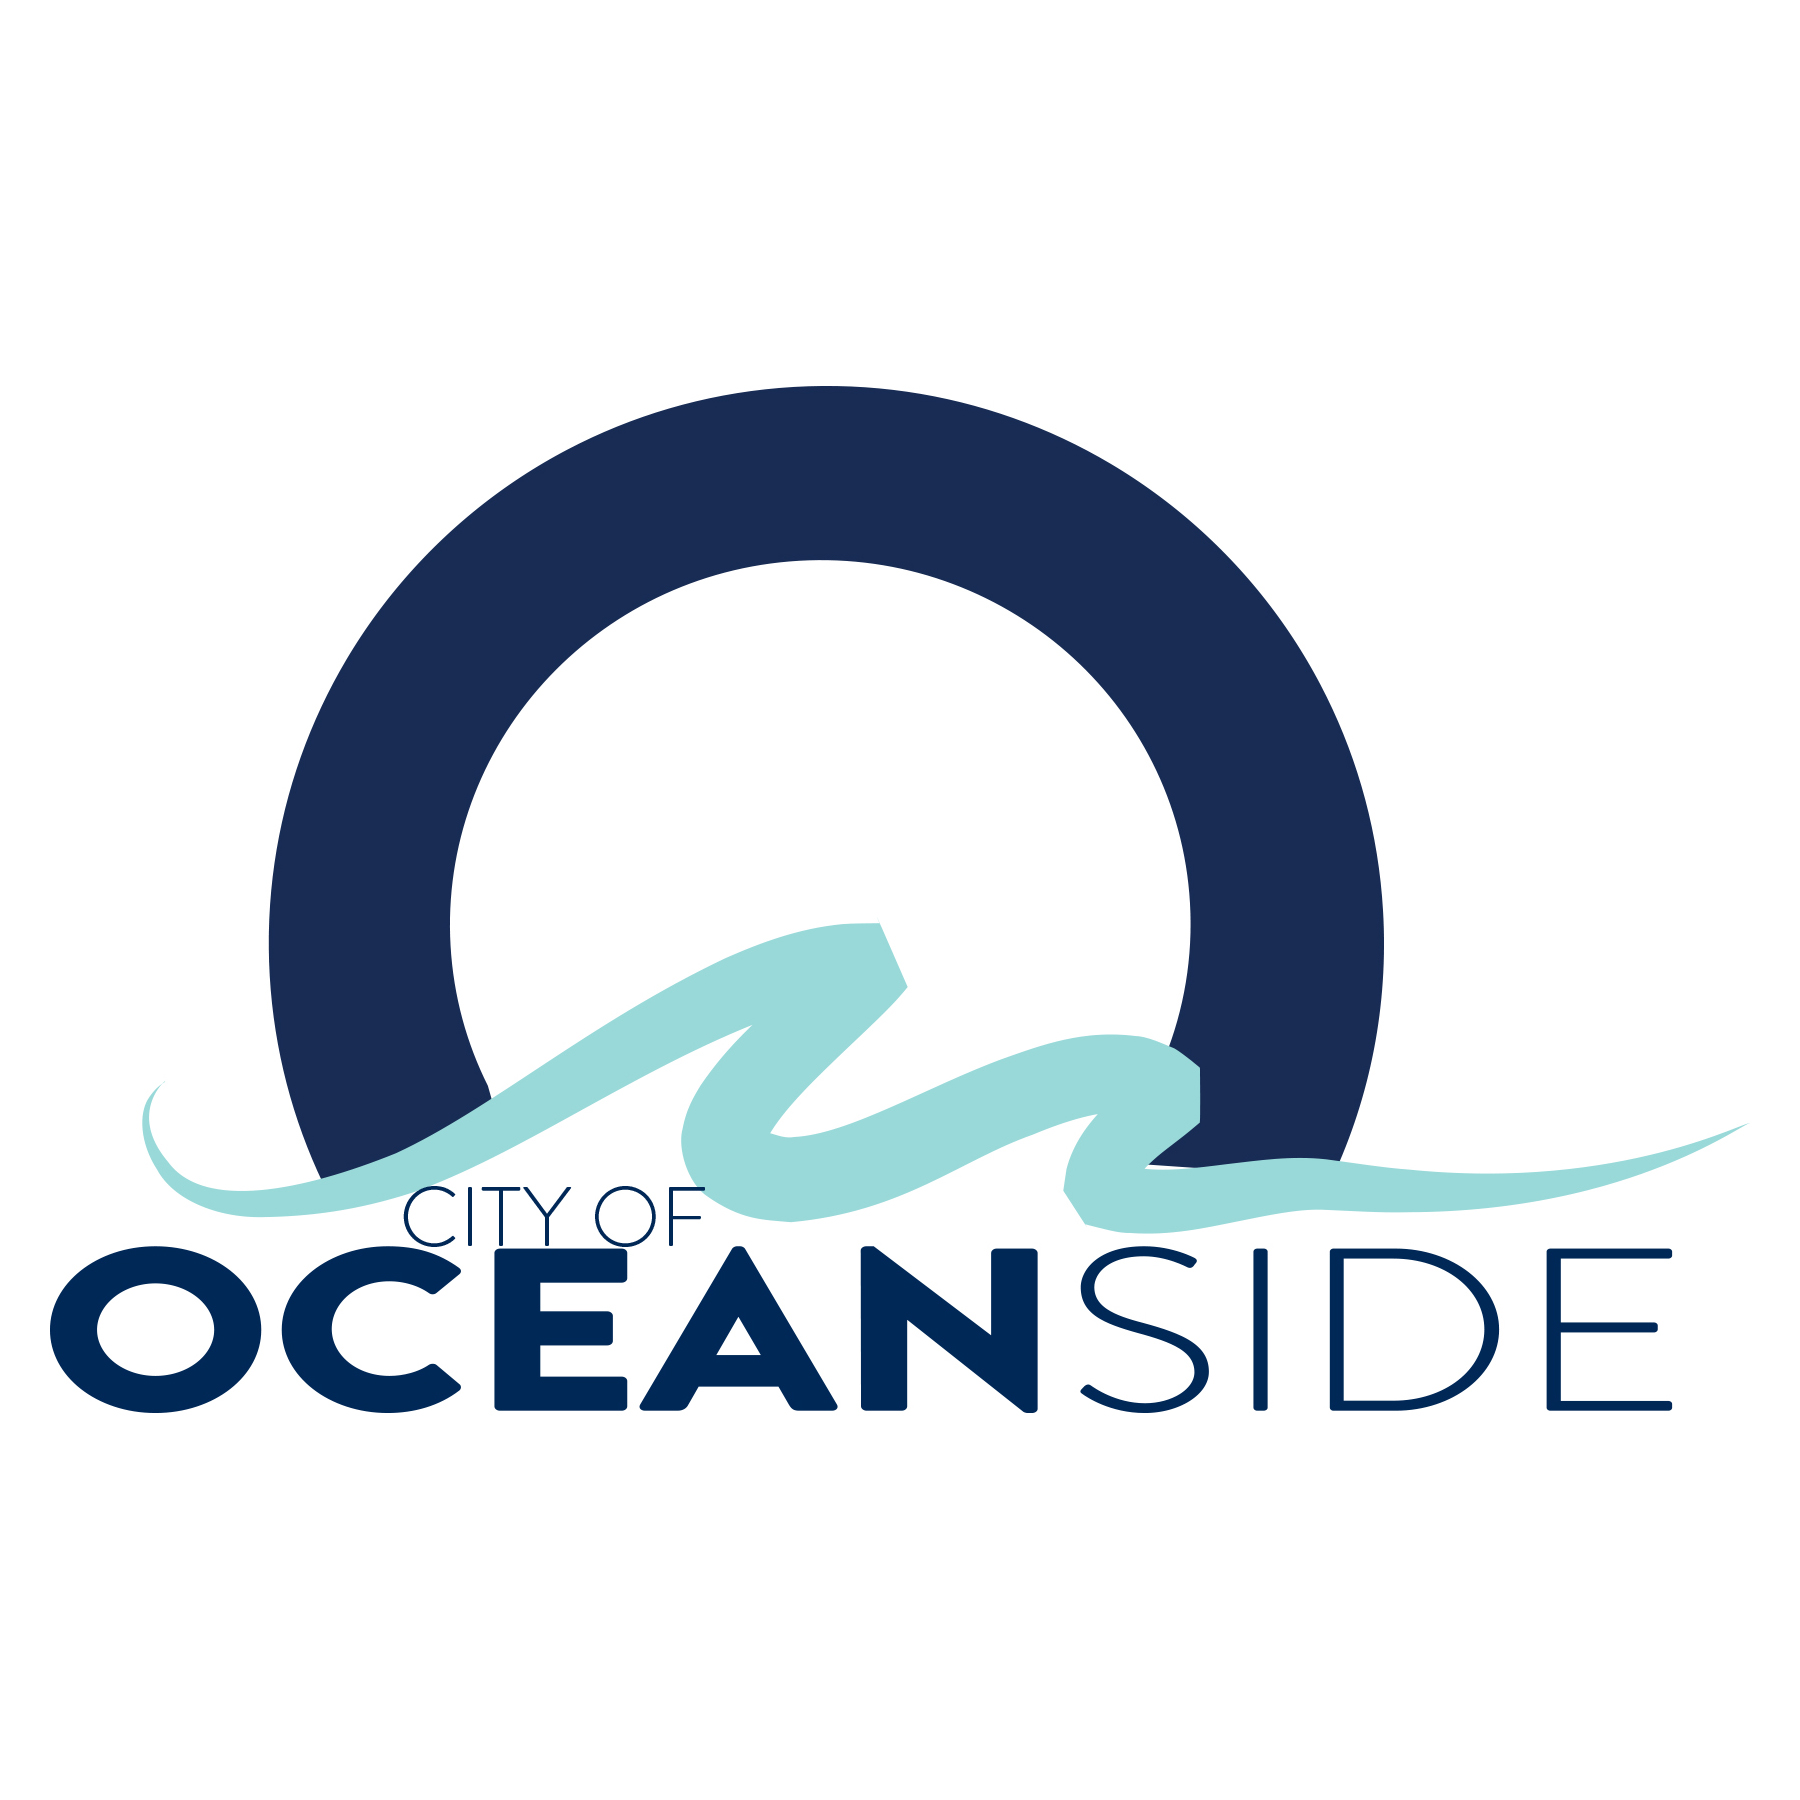 Organization logo of City of Oceanside